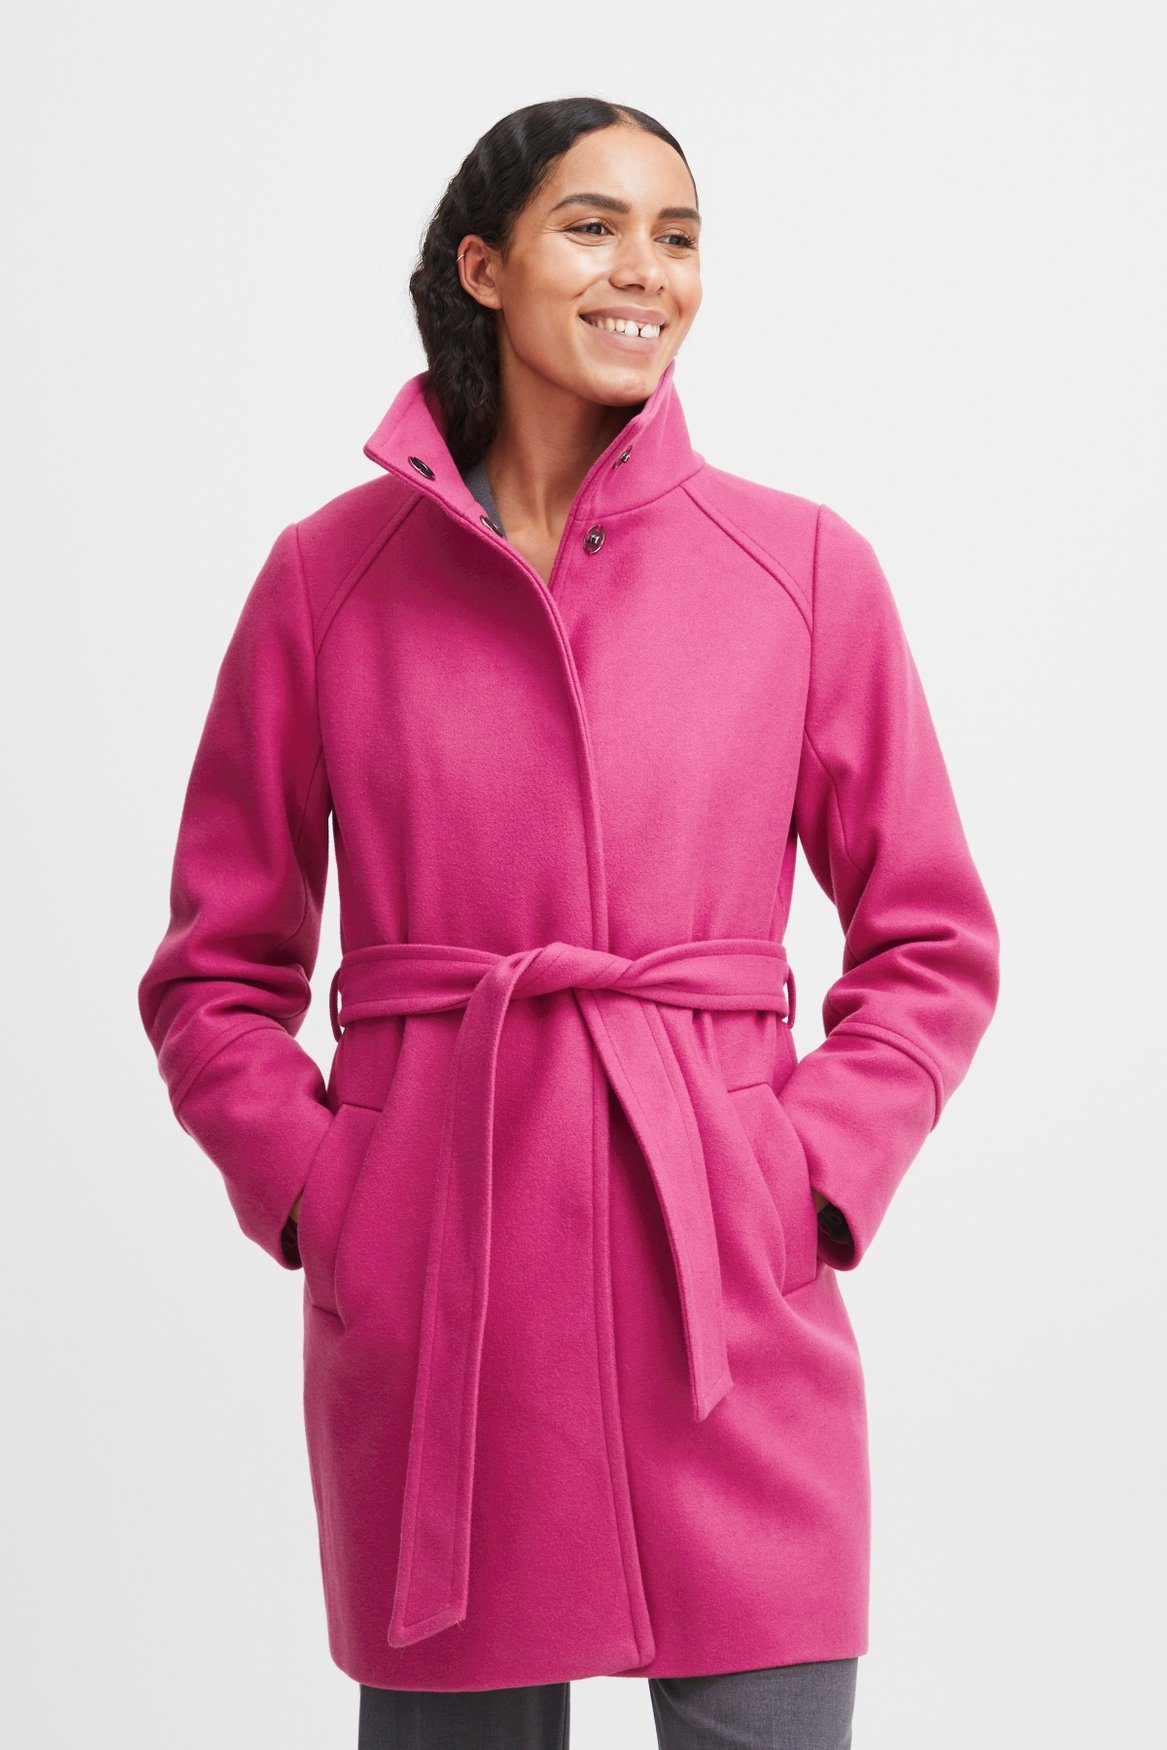 Rosa Kurzmäntel für Damen kaufen » Pinke Kurzmäntel | OTTO